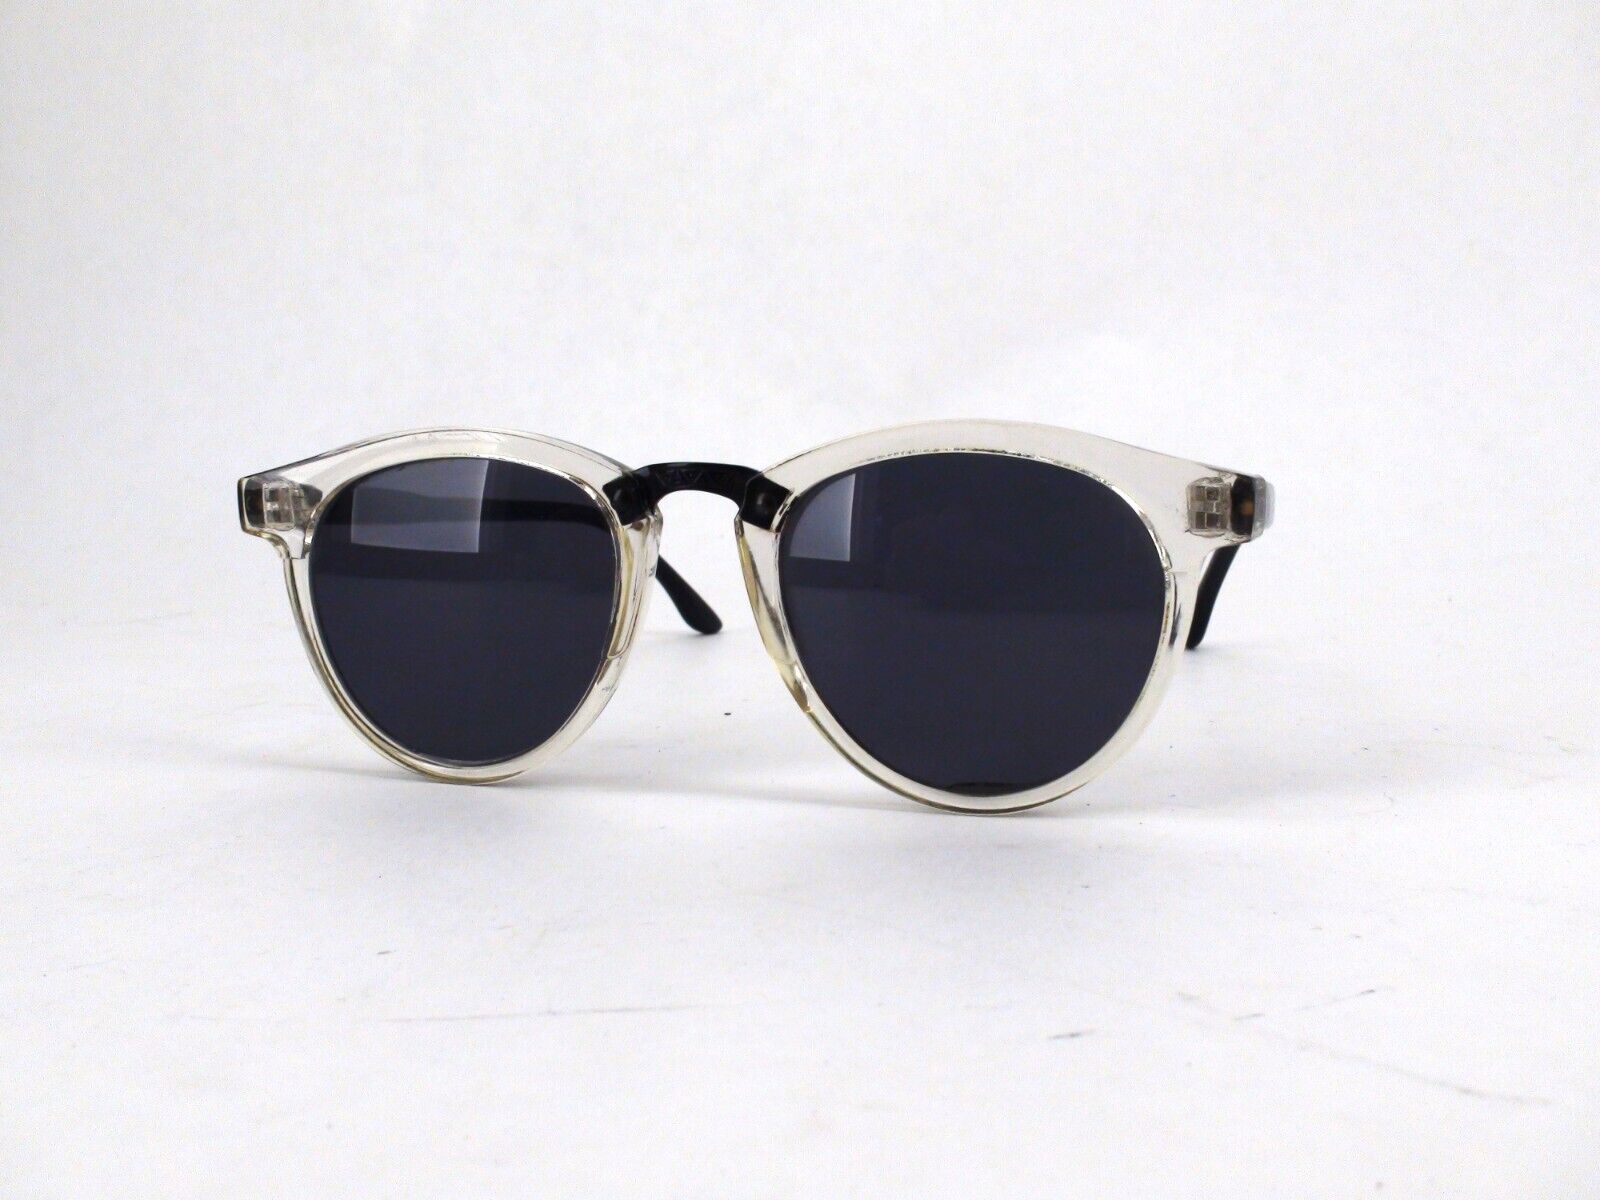 Vintage Clear Plastic Rimmed Sunglasses - Good Condition - Black Accents